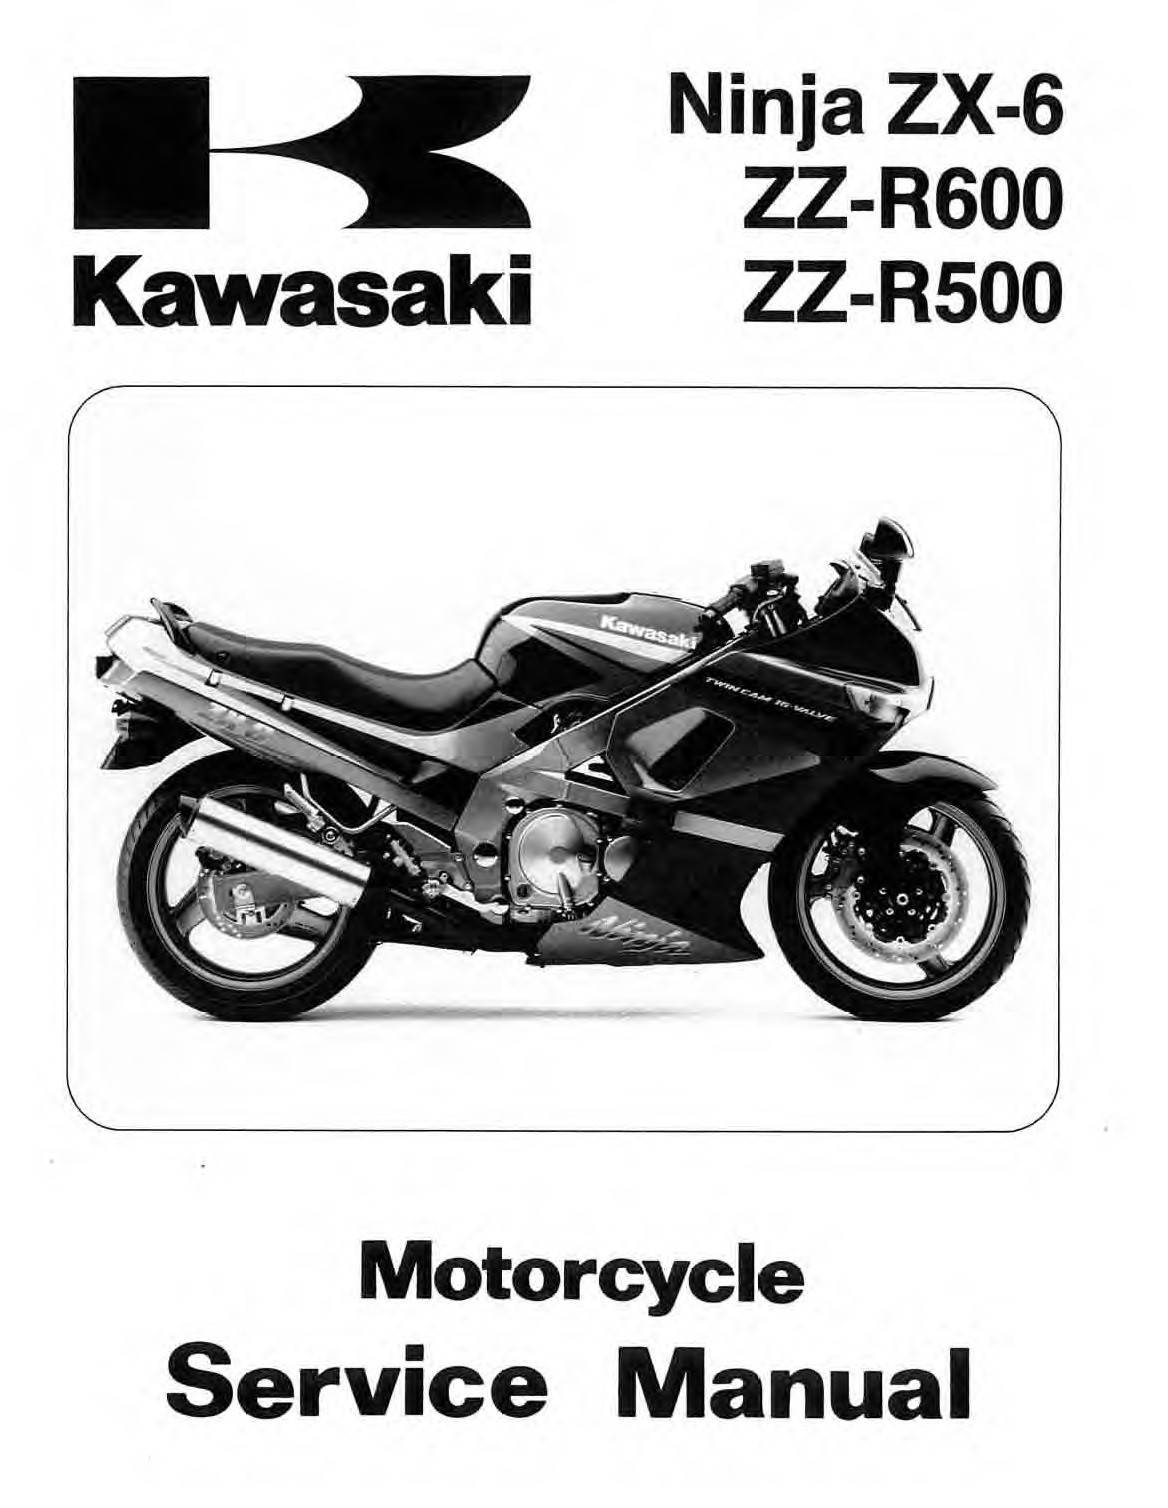 Kawasaki zzr 600 инструкция